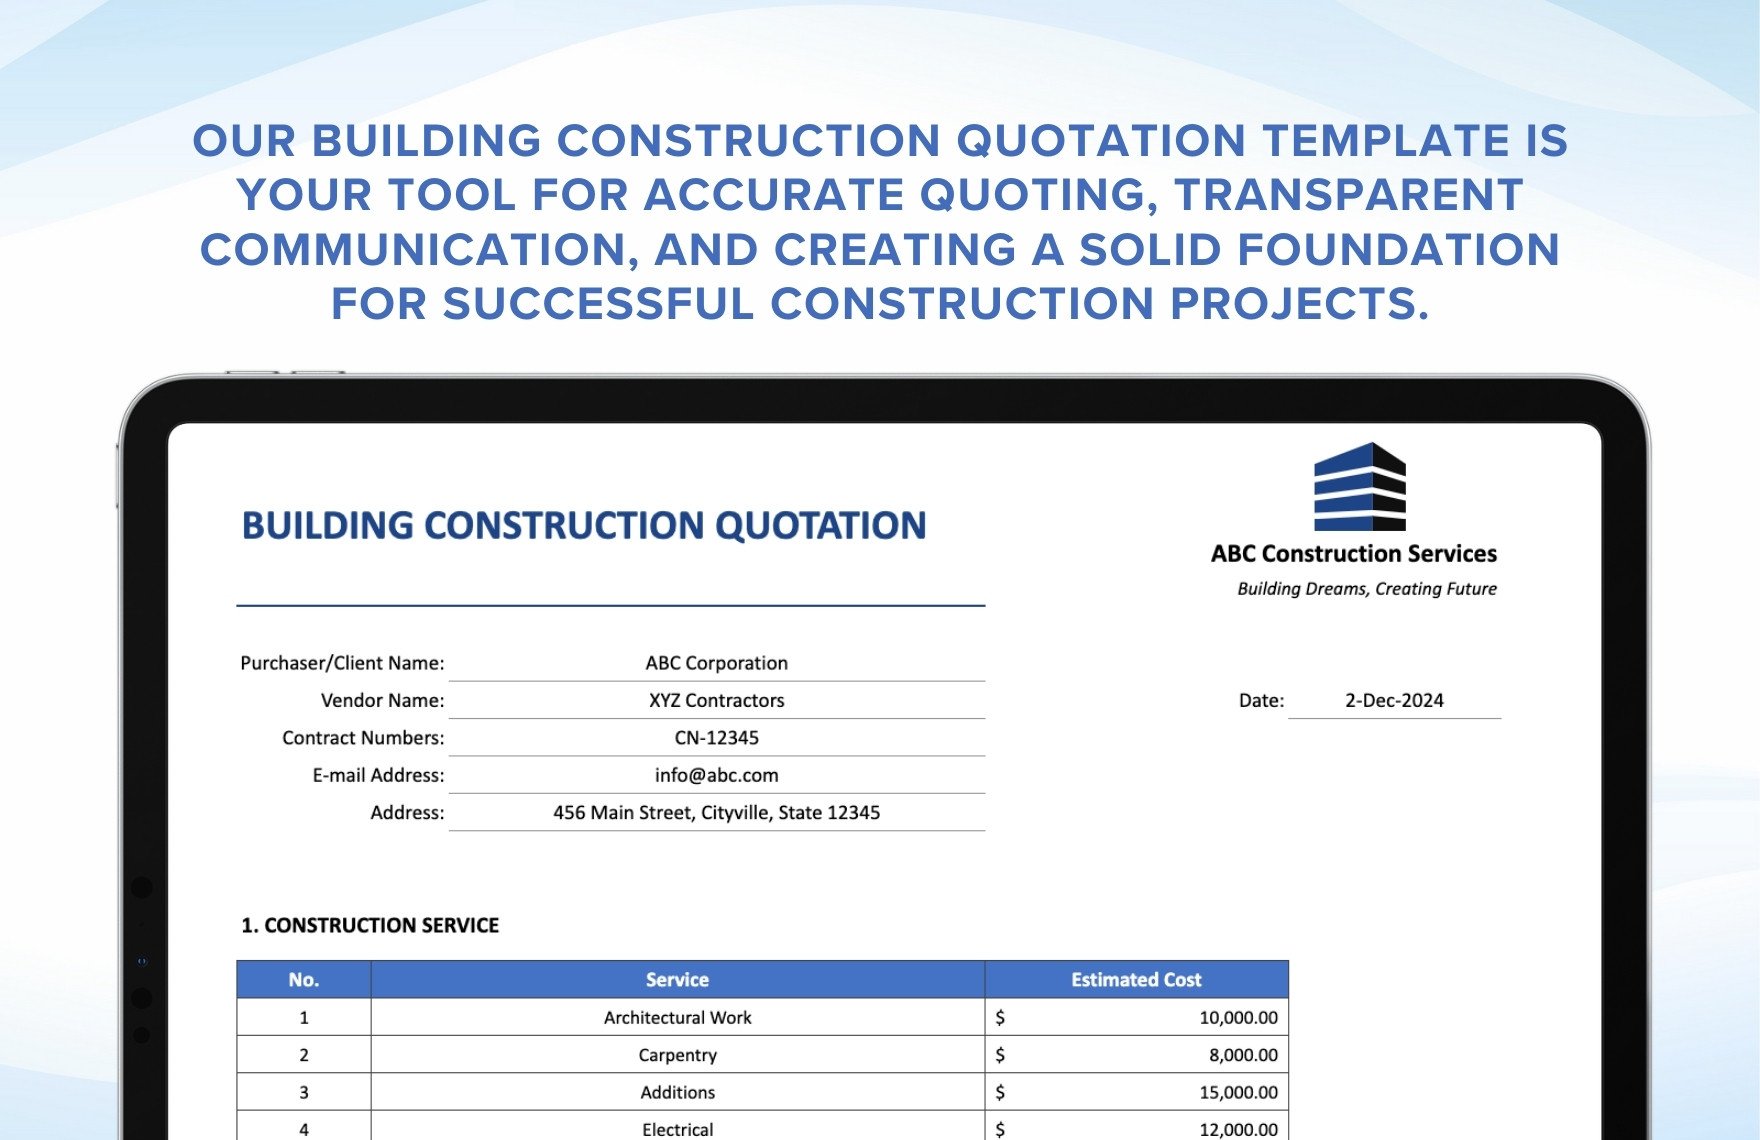 Building Construction Quotation Template